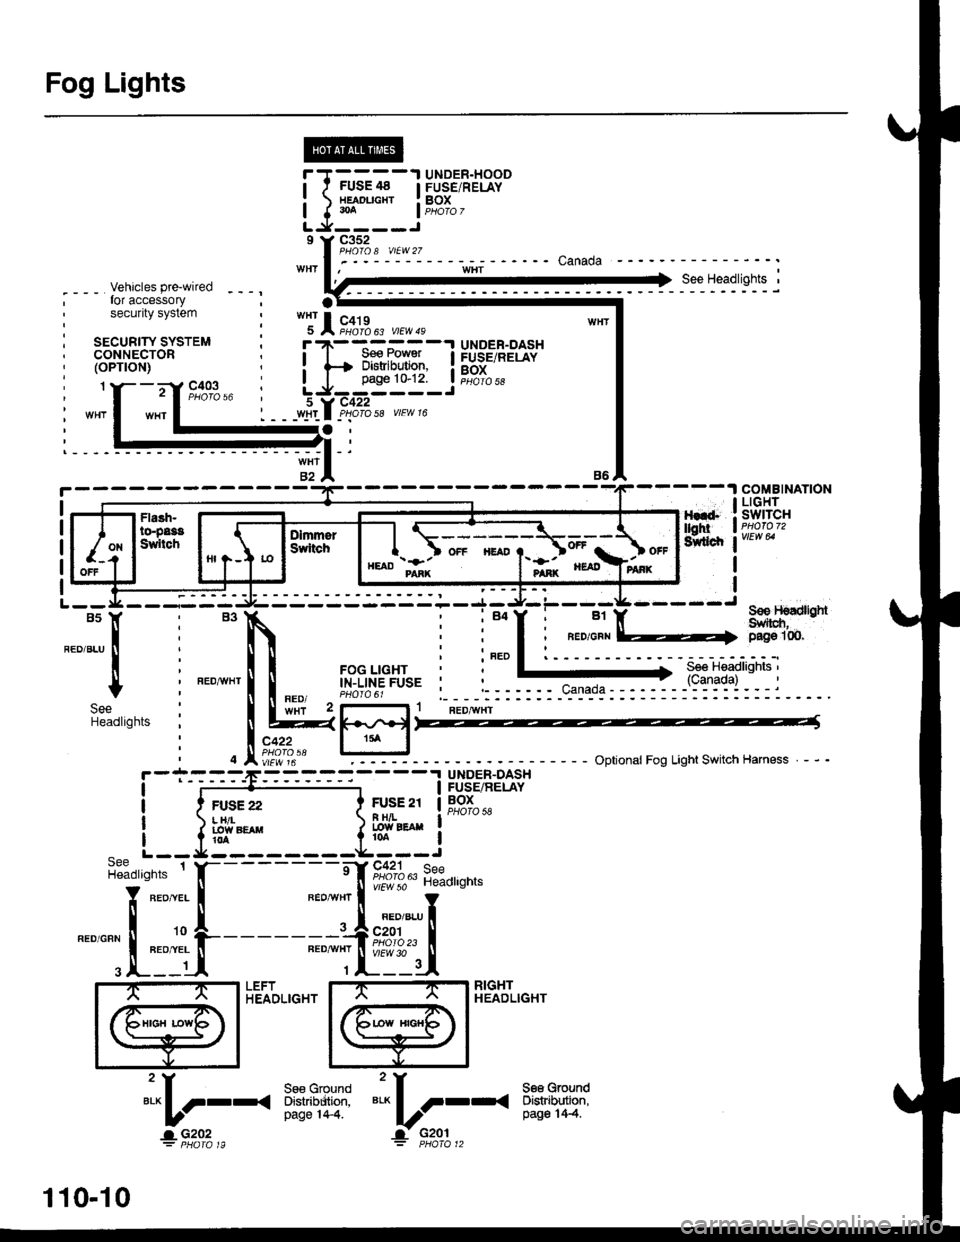 HONDA CIVIC 1996 6.G Workshop Manual Fog Lights
_ Vehicles prewiredfor accessorysecurity system
SECURITY SYSTEMCONNECTOR(oPT|ON)
"!19*13* 
u,.*,"
a
c403
----.t COMB|NAT|ON
: swrrcHI PHOIOT2
lvtEw u
I
I
FOG LIGHTIN-LINE FUSE
FUSFI H,lt